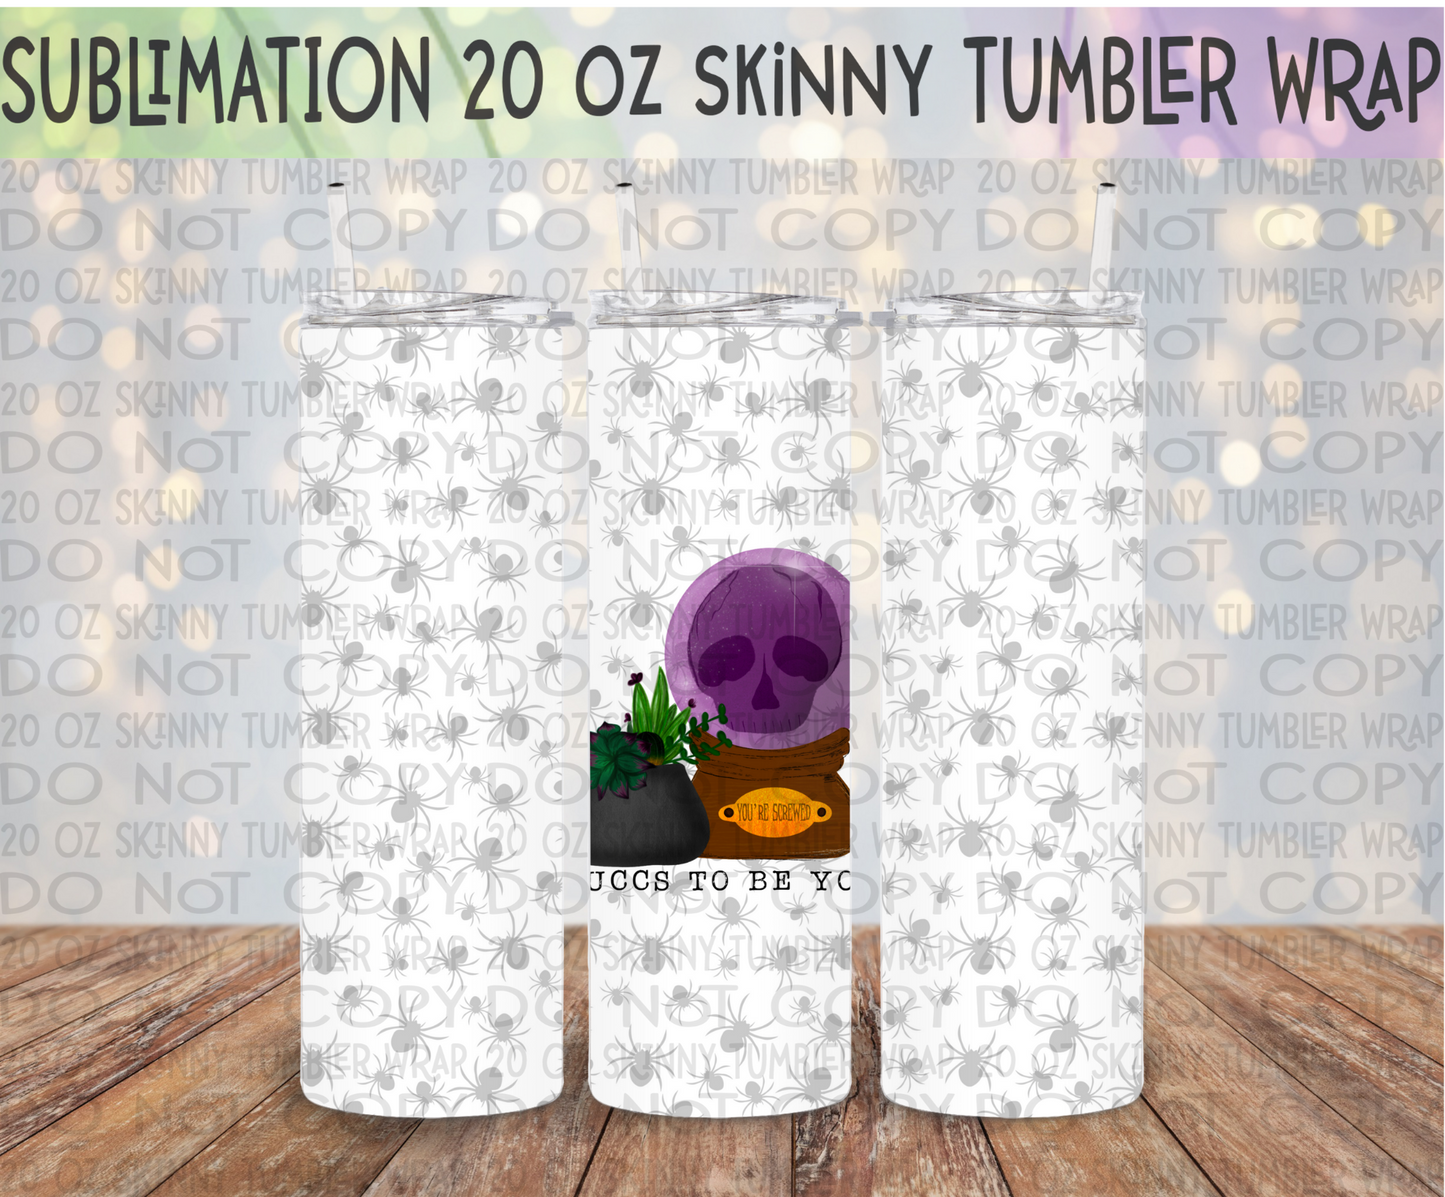 Succs to Be You 20 Oz Skinny Tumbler Wrap - Sublimation Transfer - RTS